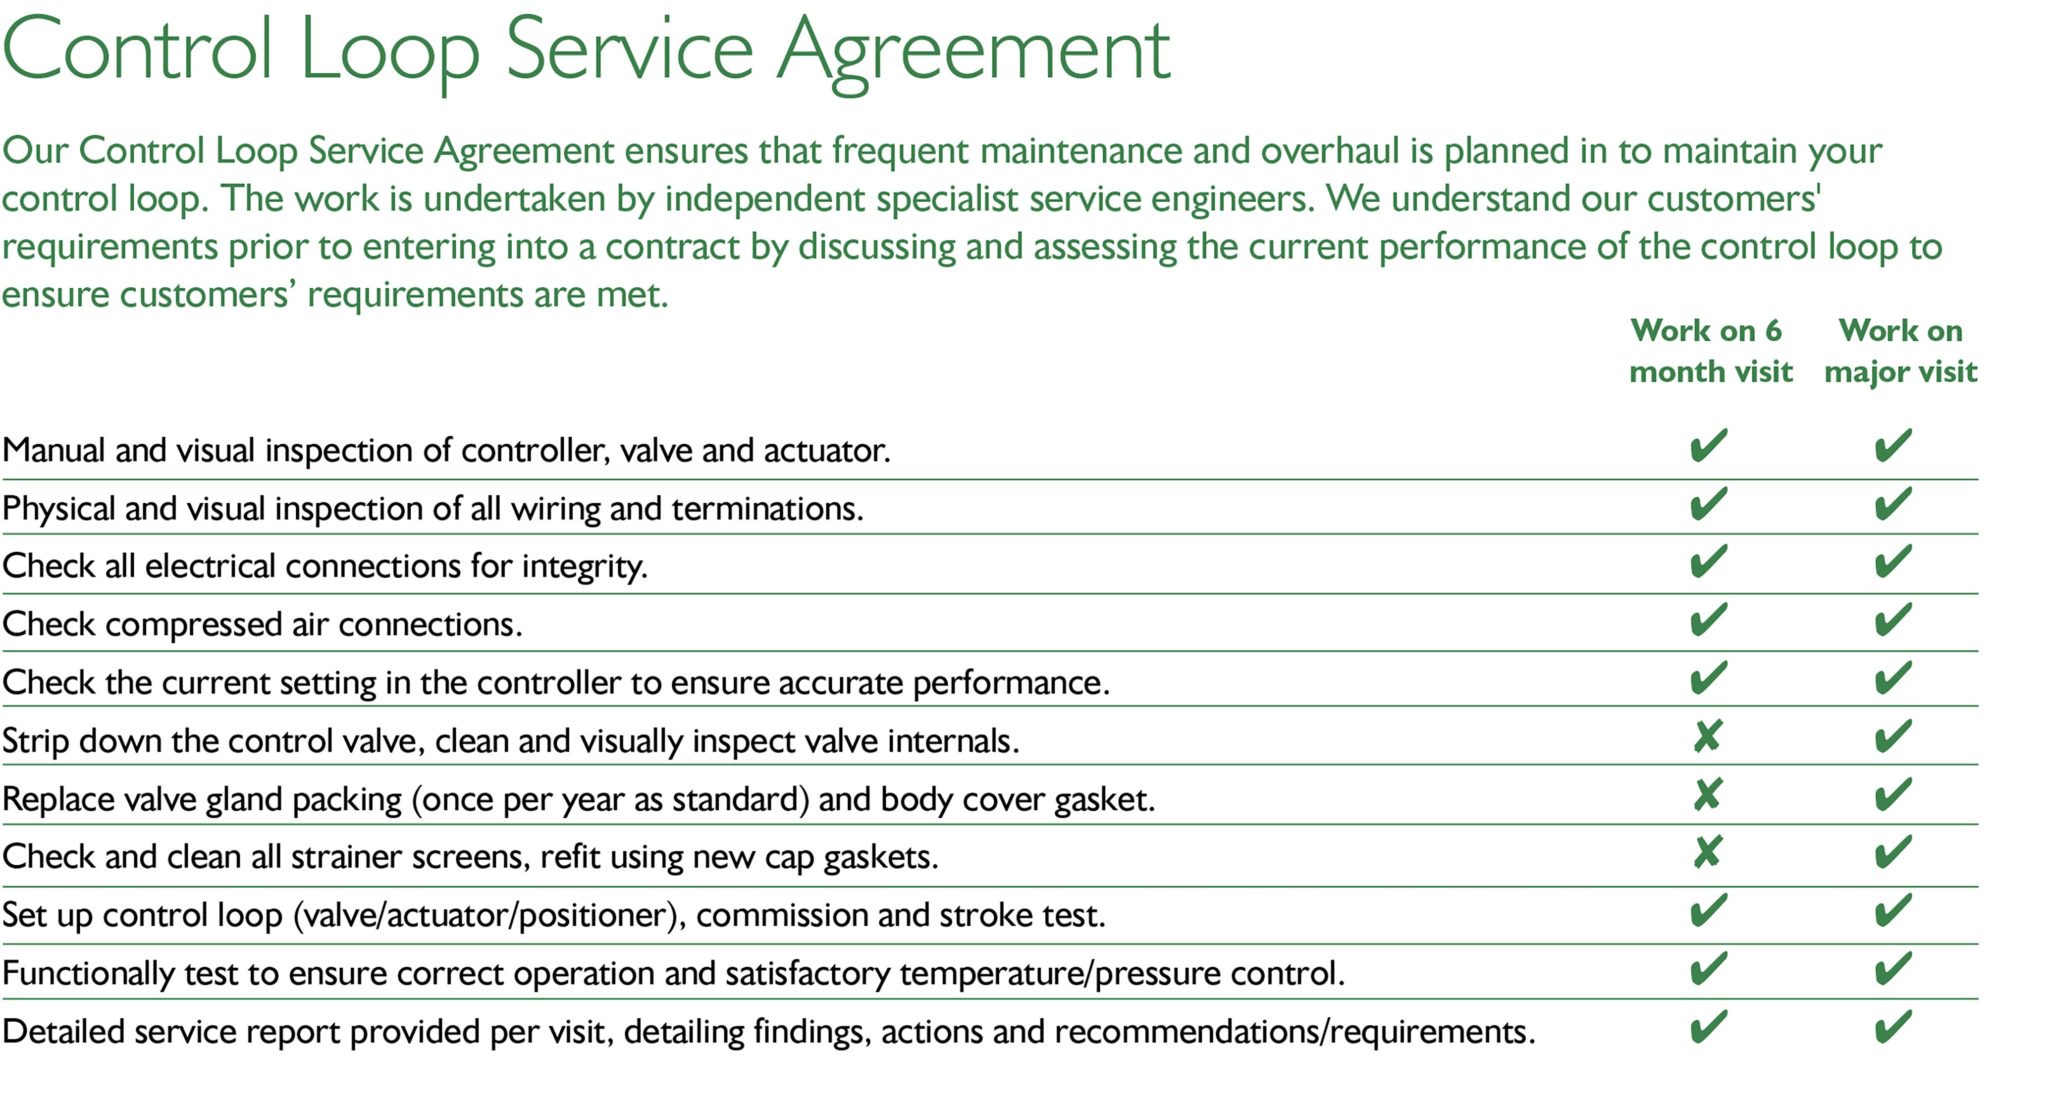 Control Loop Service Agreement